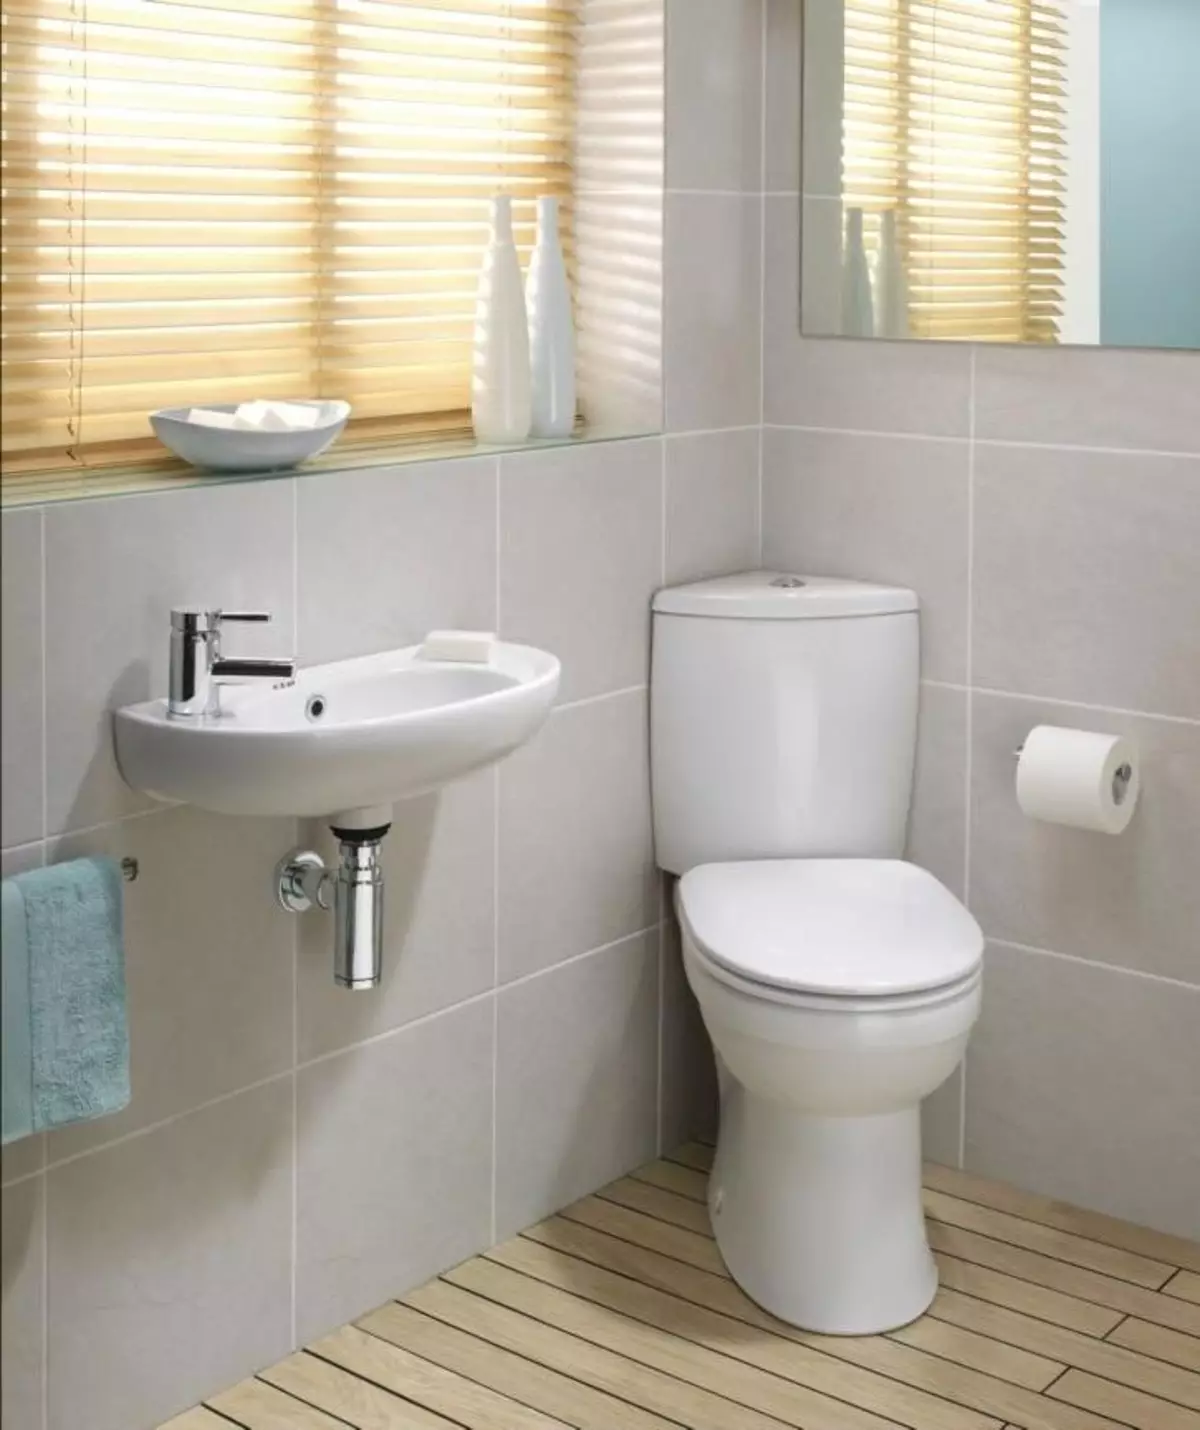 Toilet Bowl Dengan Rilis Miring: Impor Bantalan Unita-Compact, Edition Corner, Toilet Kabel Ringkas dan Model Lain Dengan Rilis Miring 10523_7